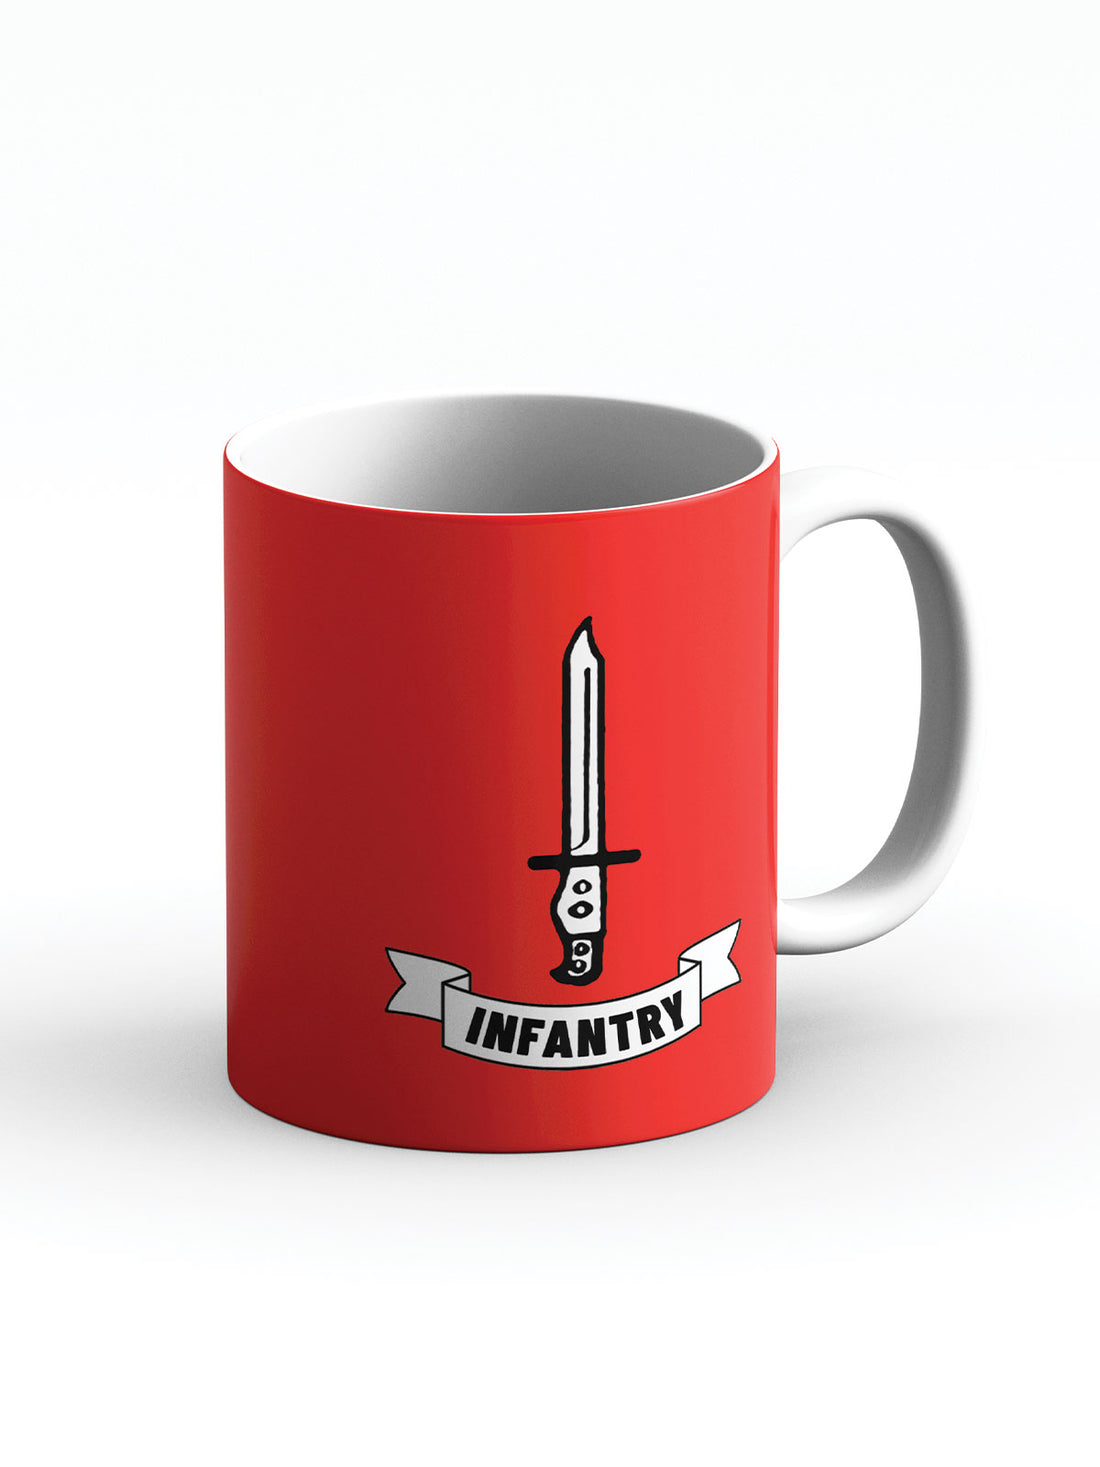 Infantry The Ultimate Coffee Mug